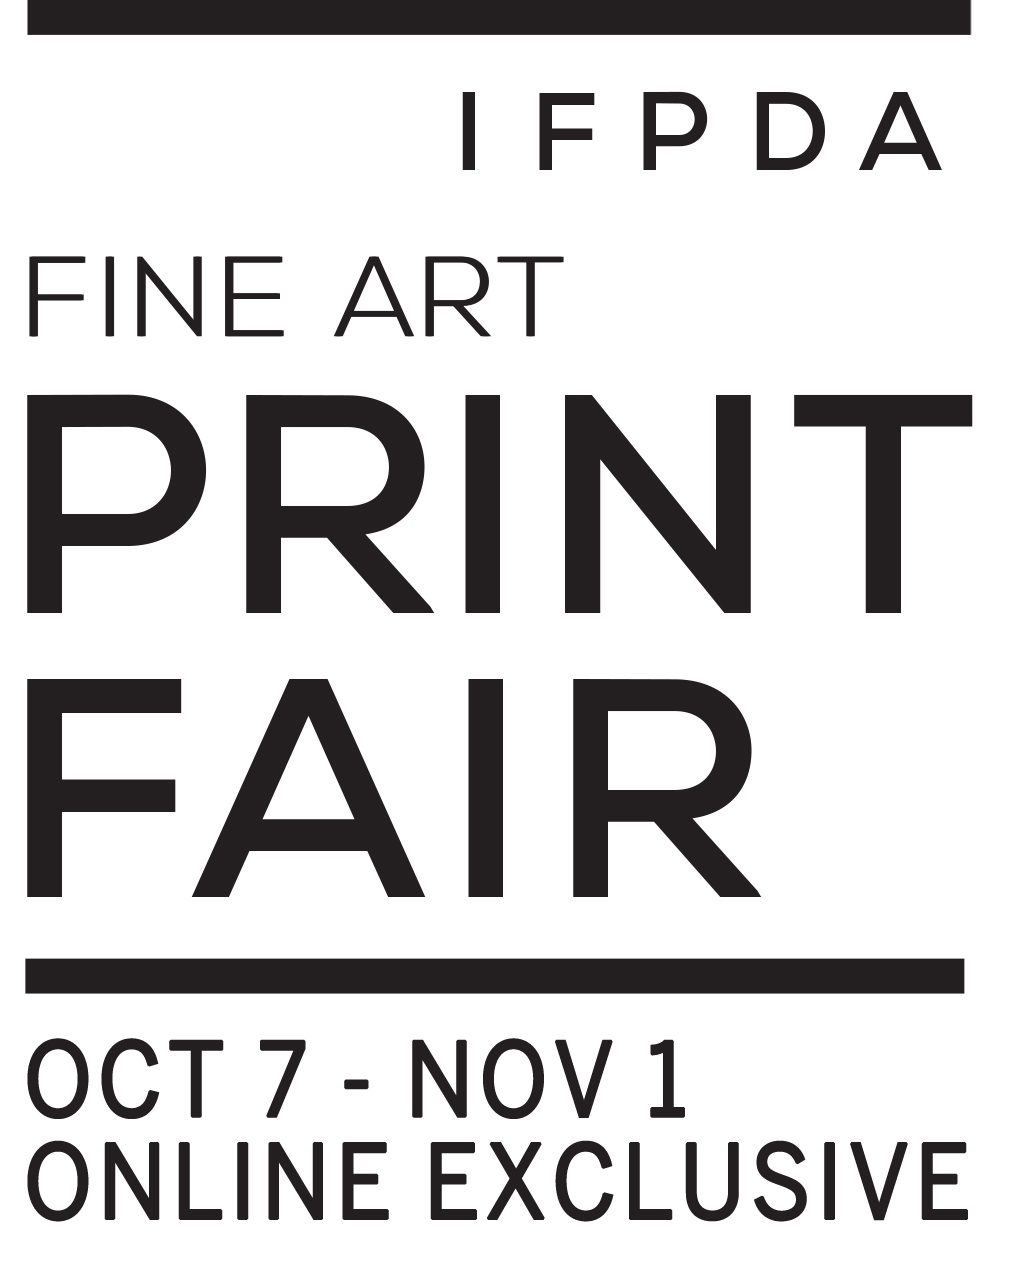 IFPDA Print Fair online October 2020